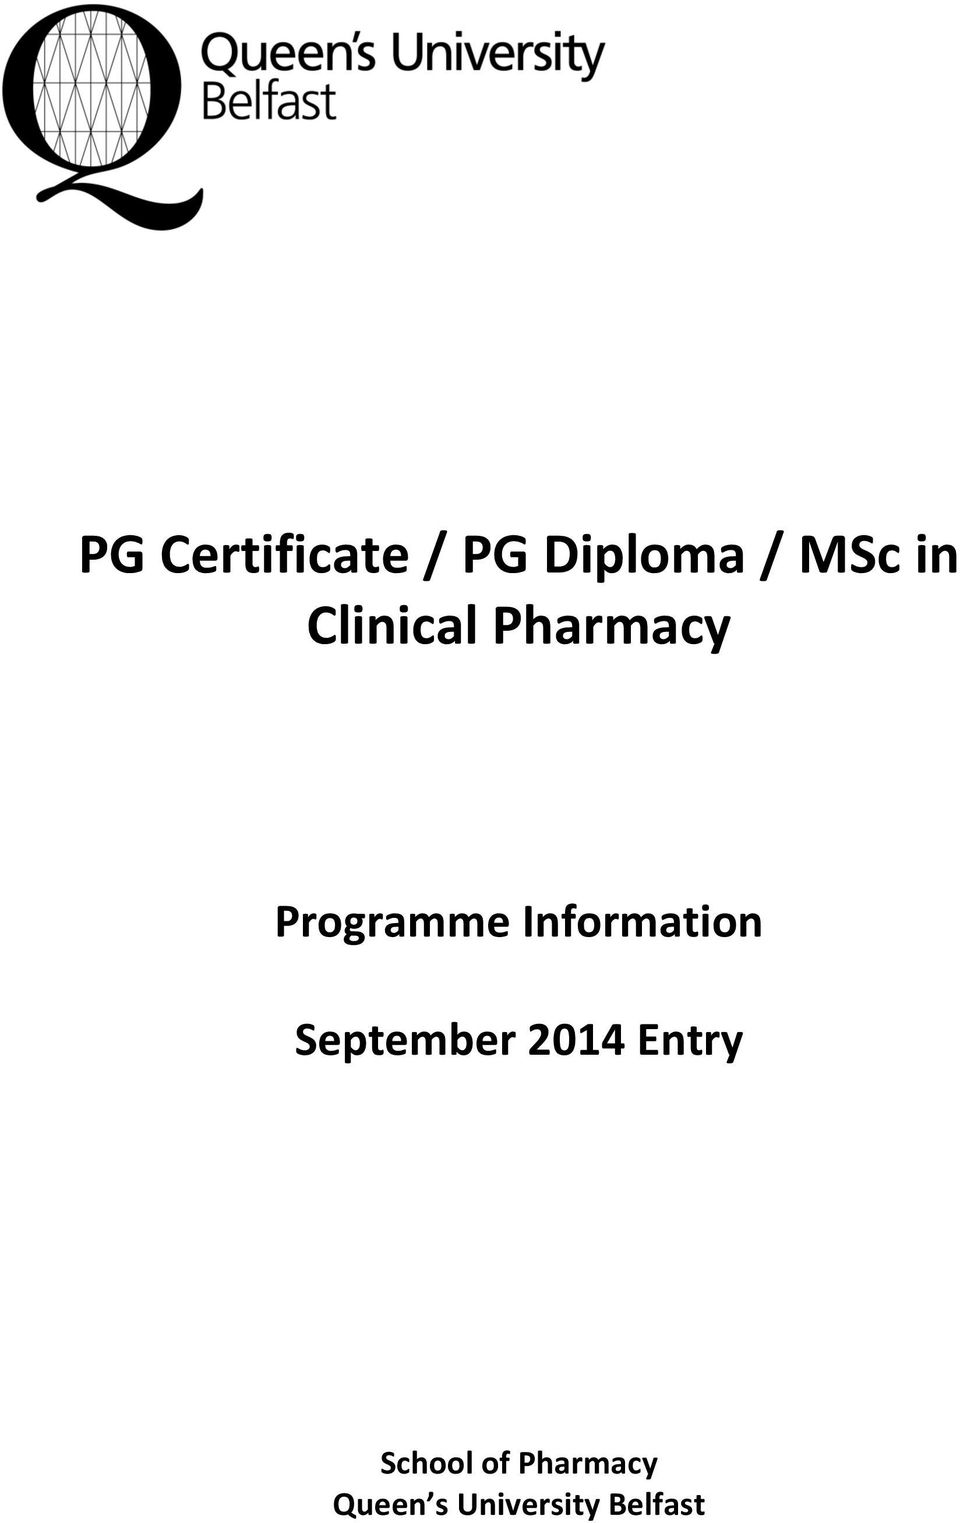 Information September 2014 Entry